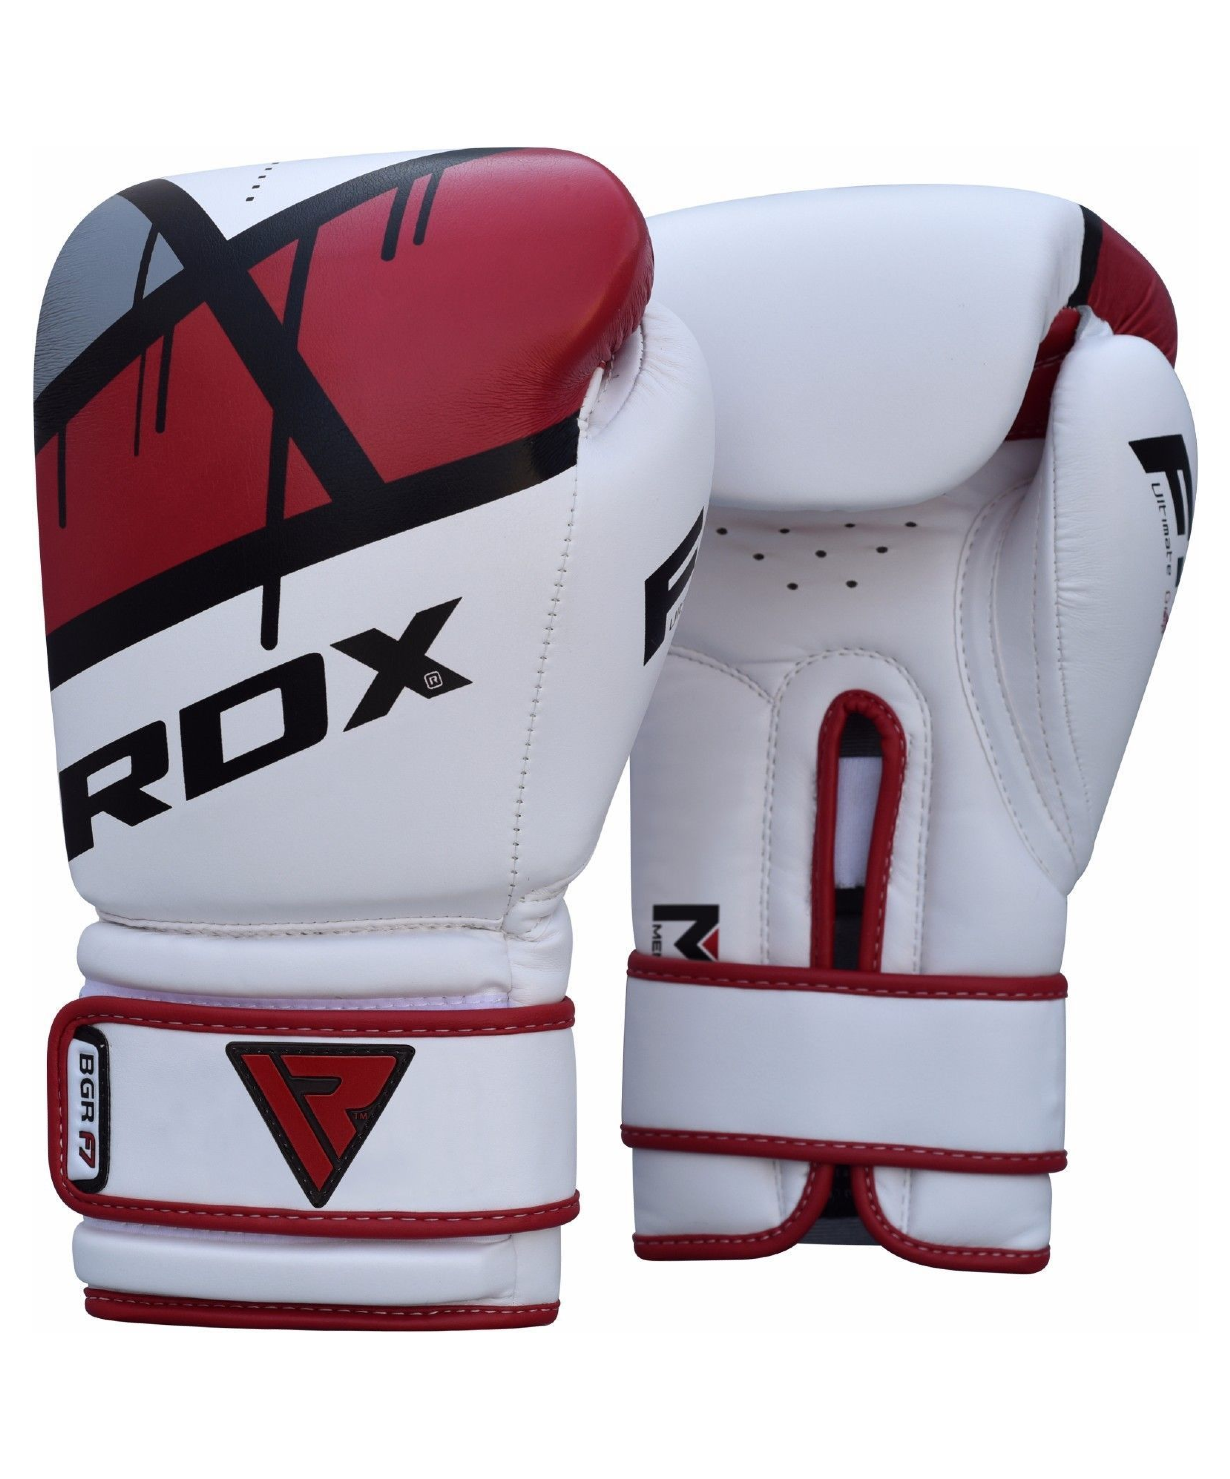 фото Rdx перчатки боксерские bgr-f7 red bgr-f7r, 8 oz